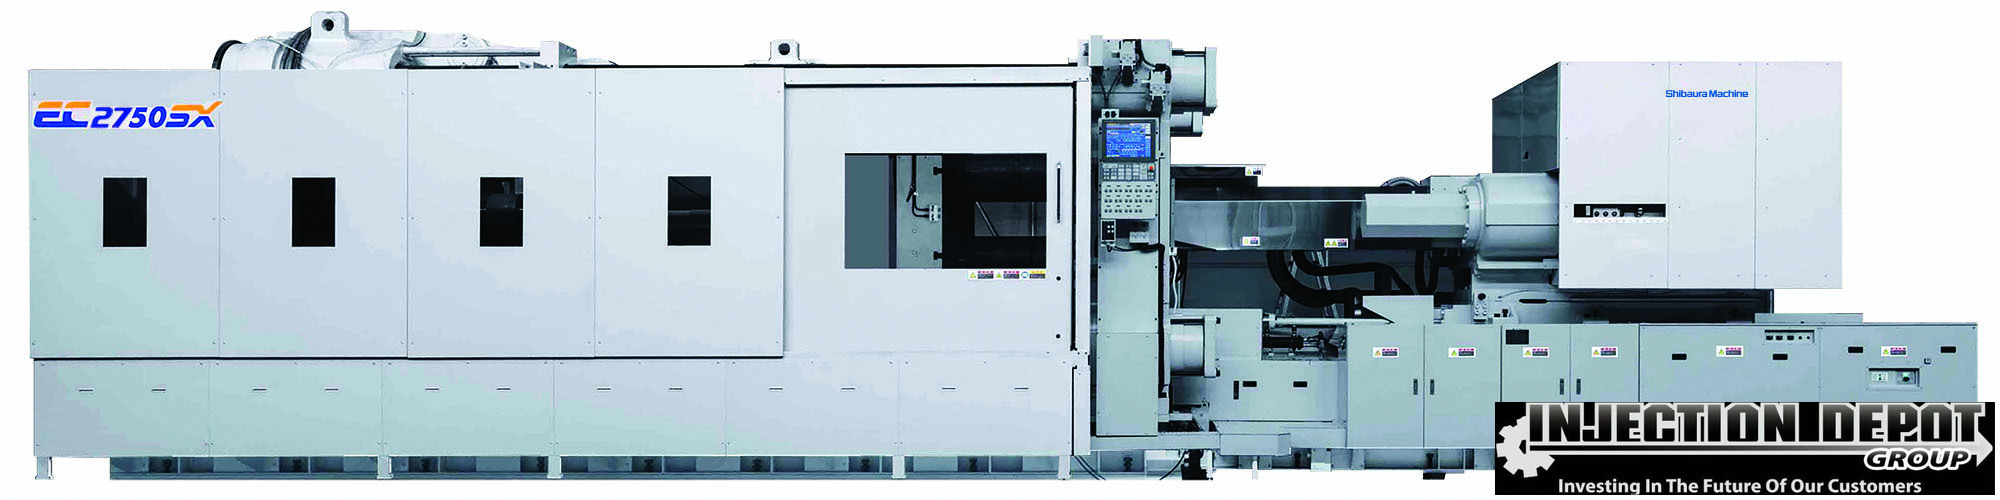 SHIBAURA MACHINE EC2750SXIIIV70-i215 A Horizontal Injection Moulding Machines | INJECTION DEPOT GROUP